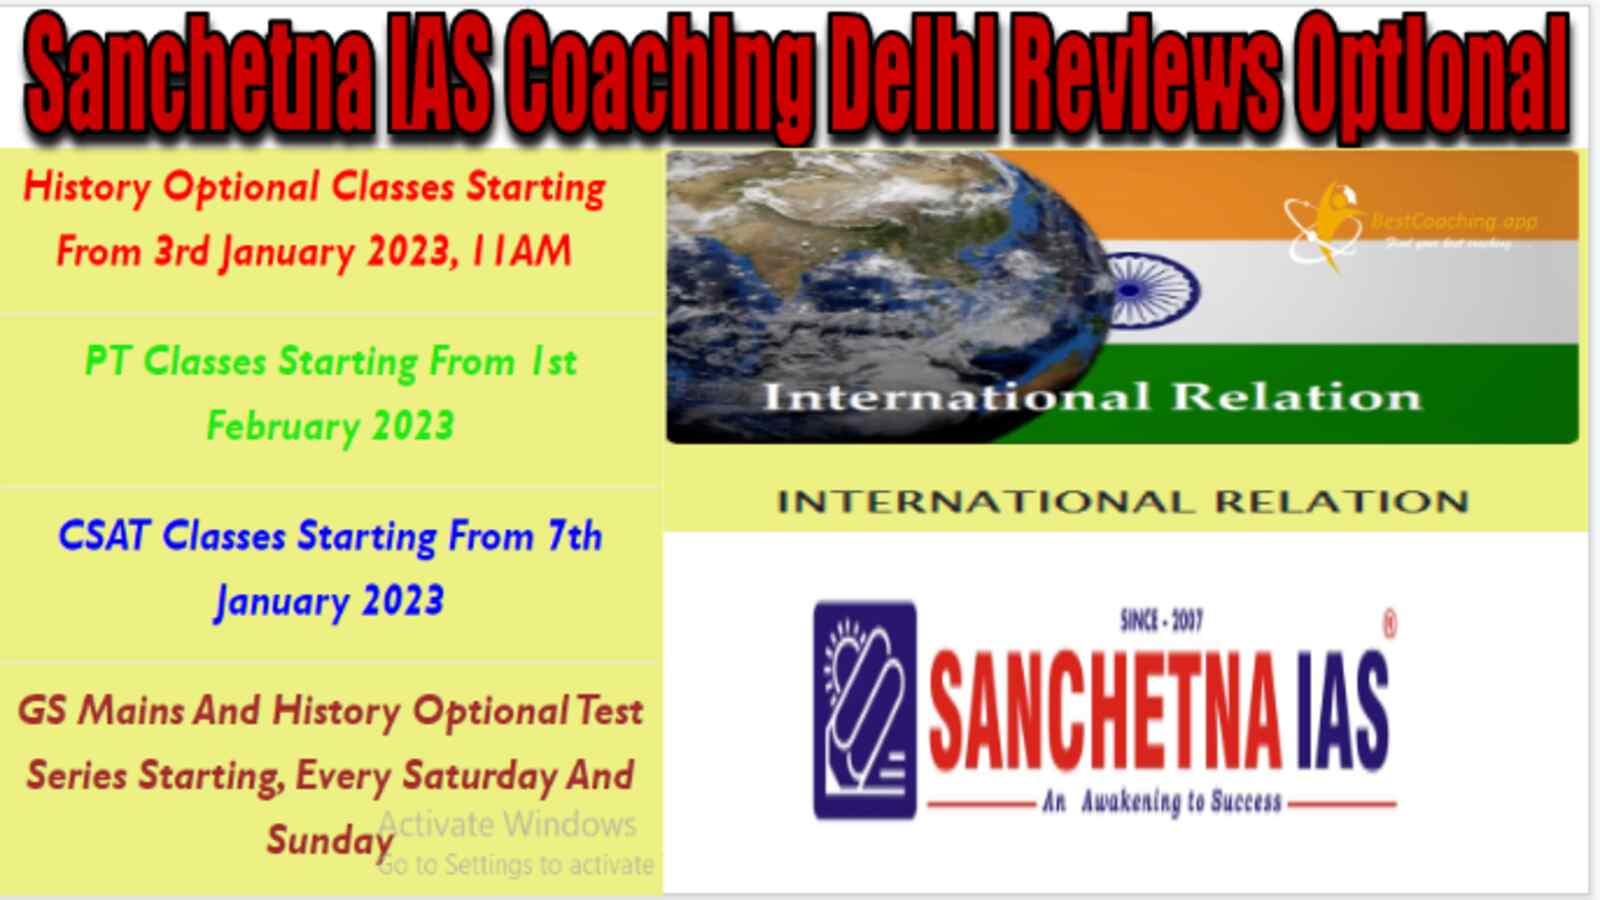 Sanchetna IAS Coaching Delhi Review Optional